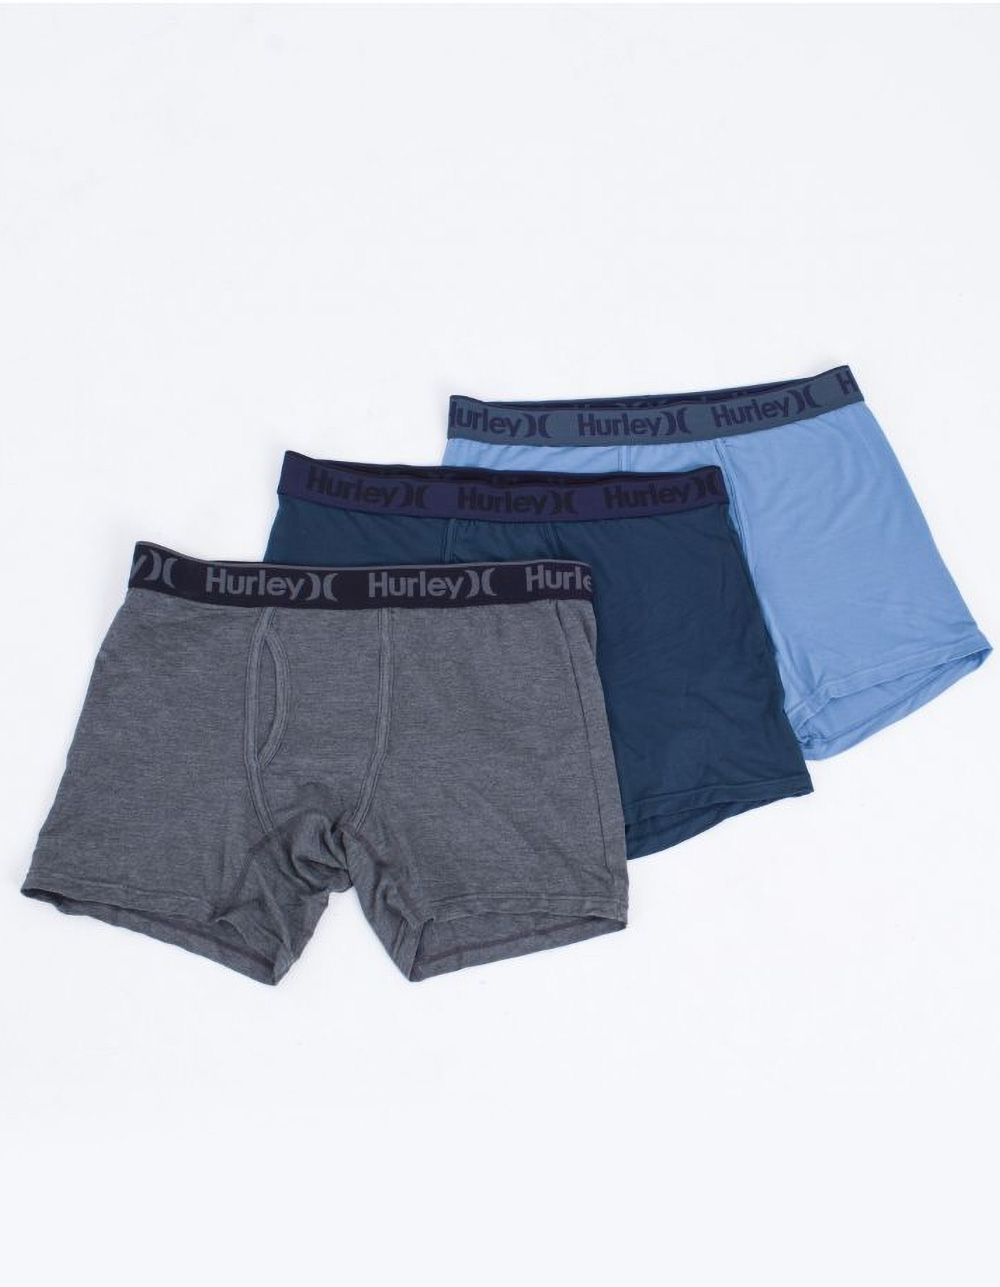  Hurley Girls' Bikini Underwear (5-Pack), Blue/Pink, 4